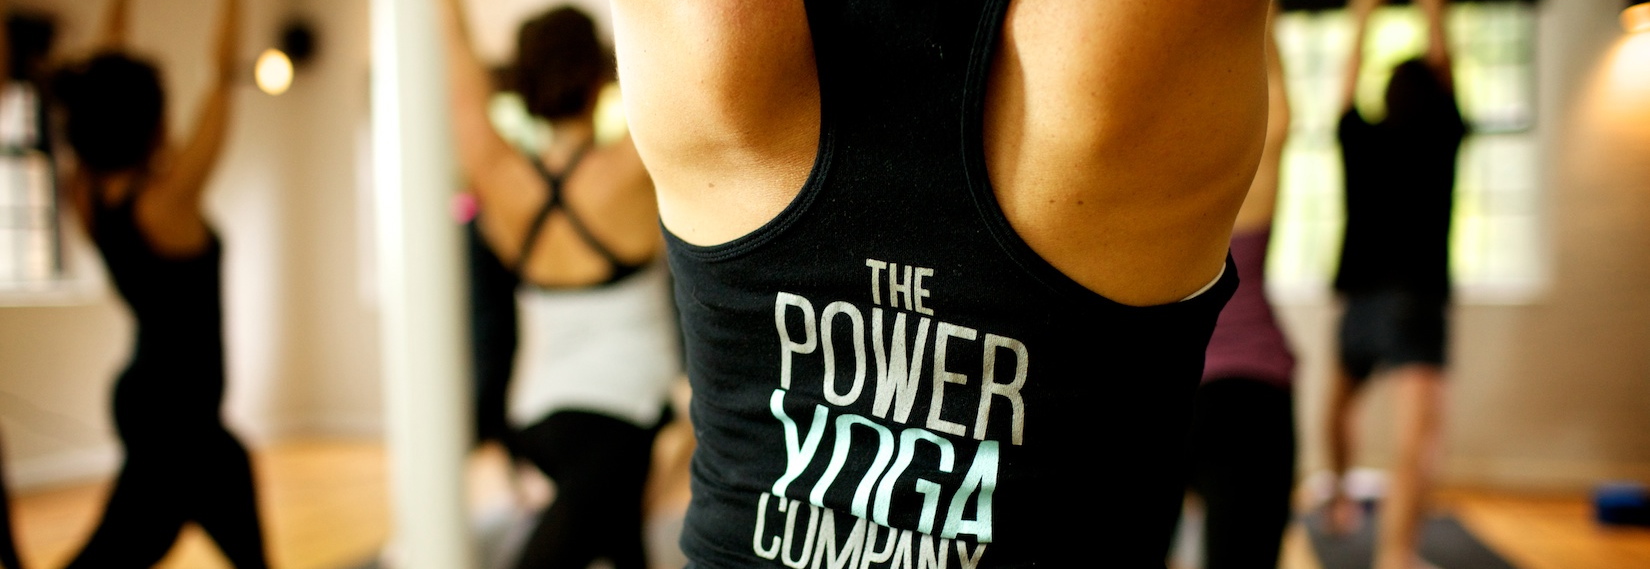 The Power Yoga Company Image